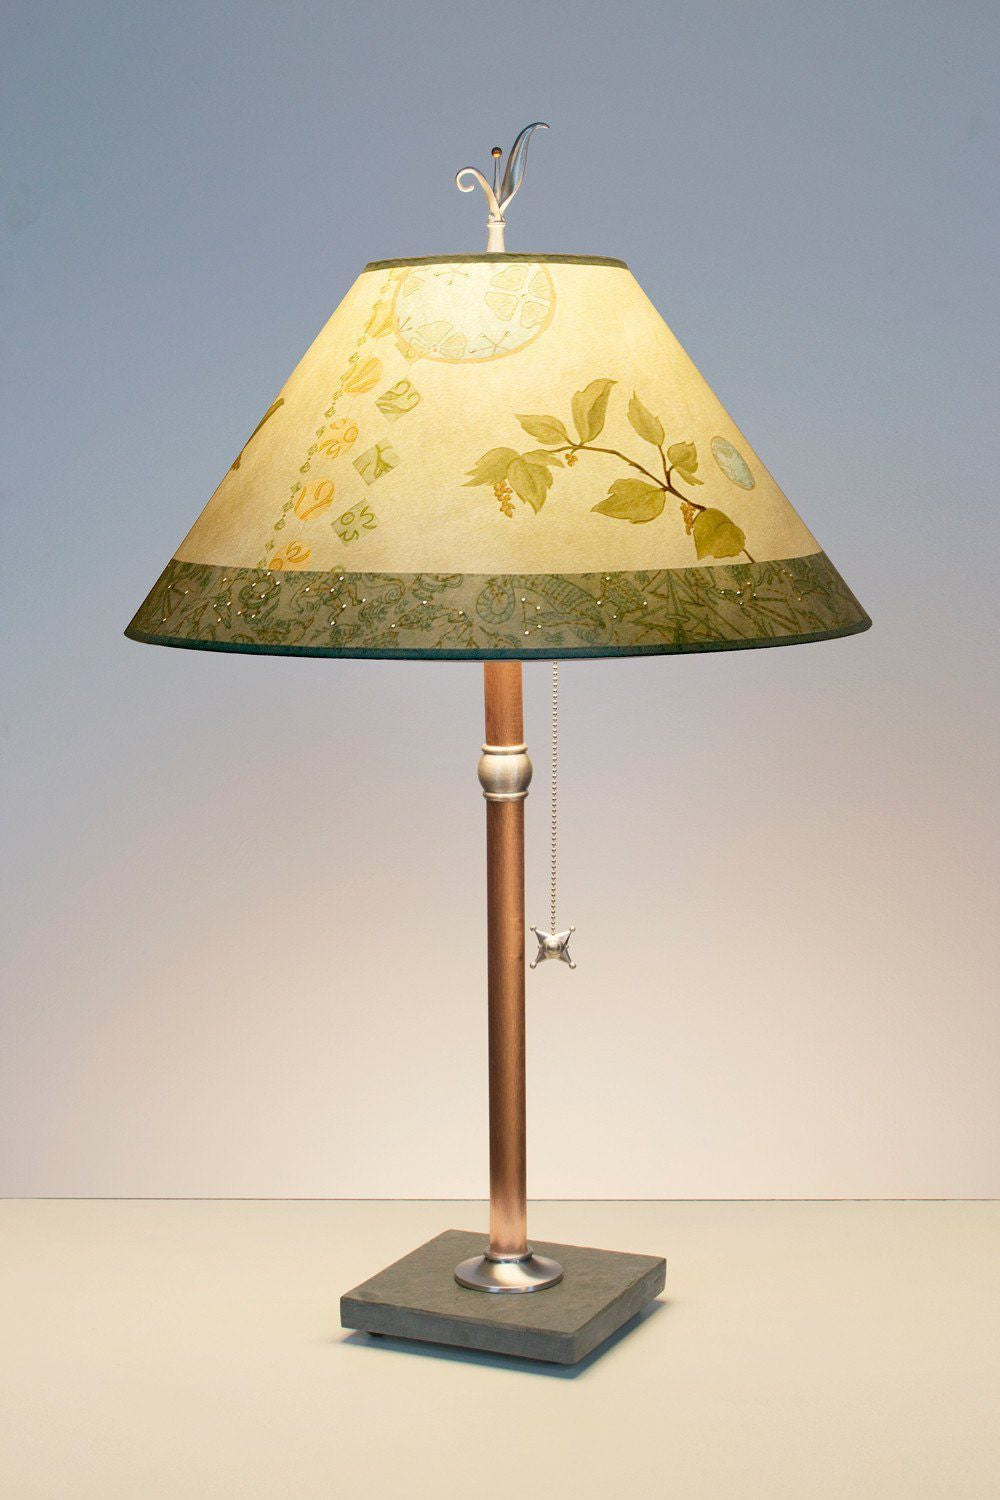 Celestial Leaf large conical copper table lamp lit